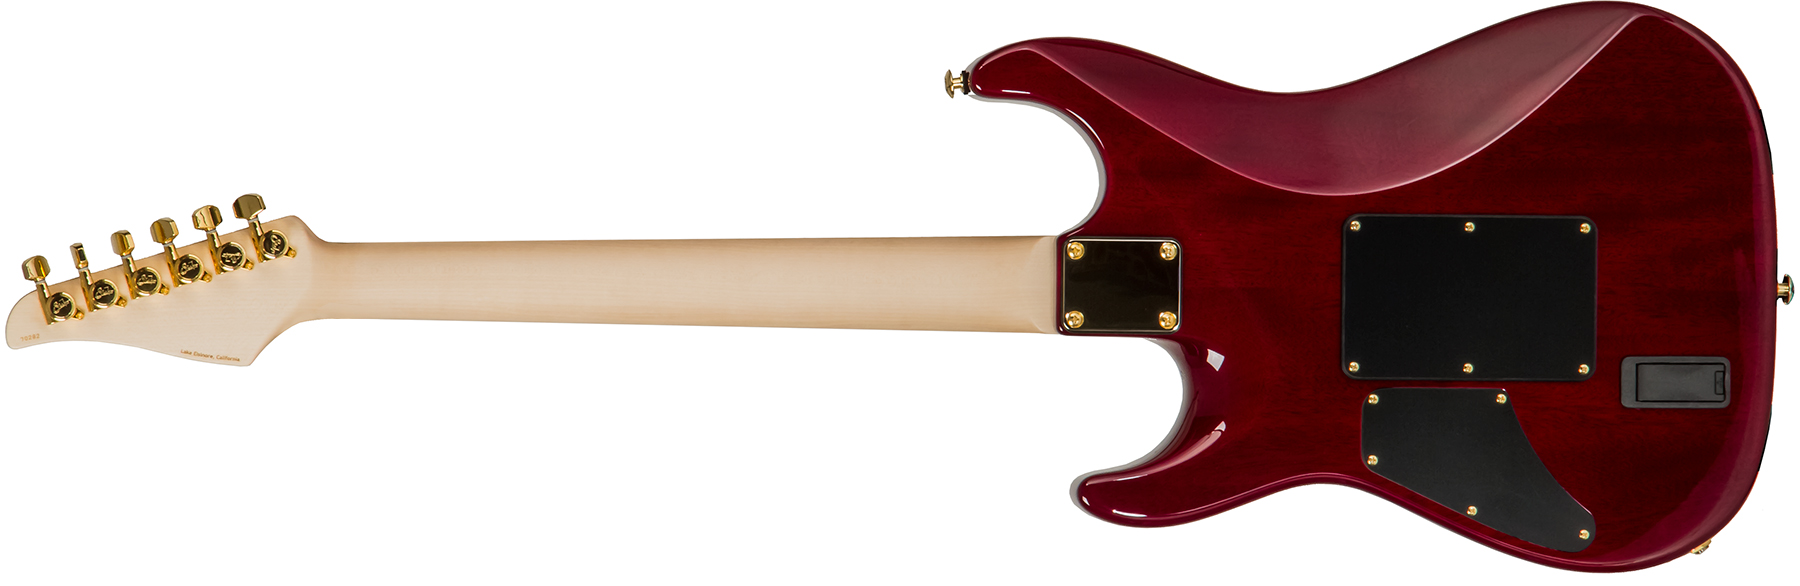 Suhr Standard Legacy 01-ltd-0030 Hss Emg Fr Rw #70282 - Aged Cherry Burst - Str shape electric guitar - Variation 1